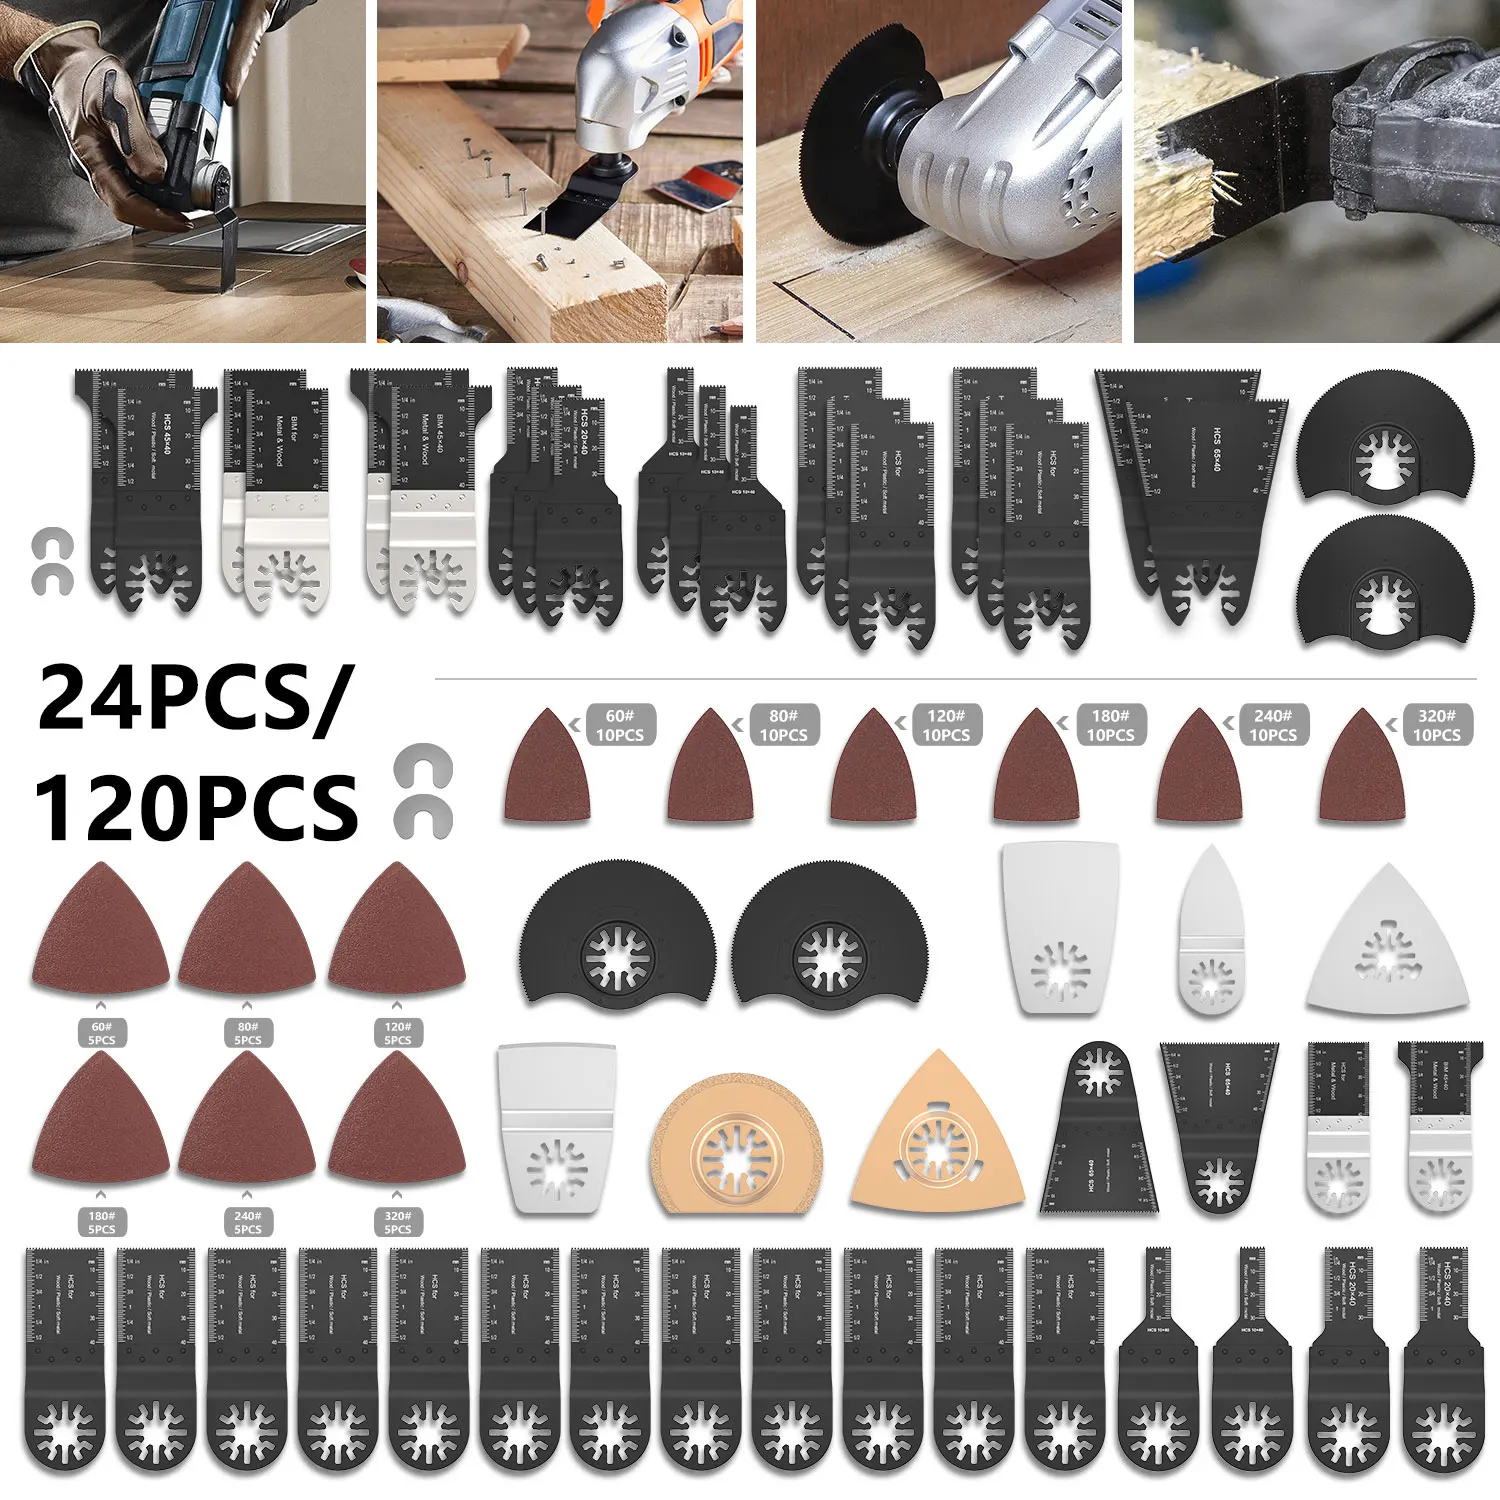 20X Oscillating Multi Tool Saw Mix Blades Kit For Bosch Fein Multimaster Makita 